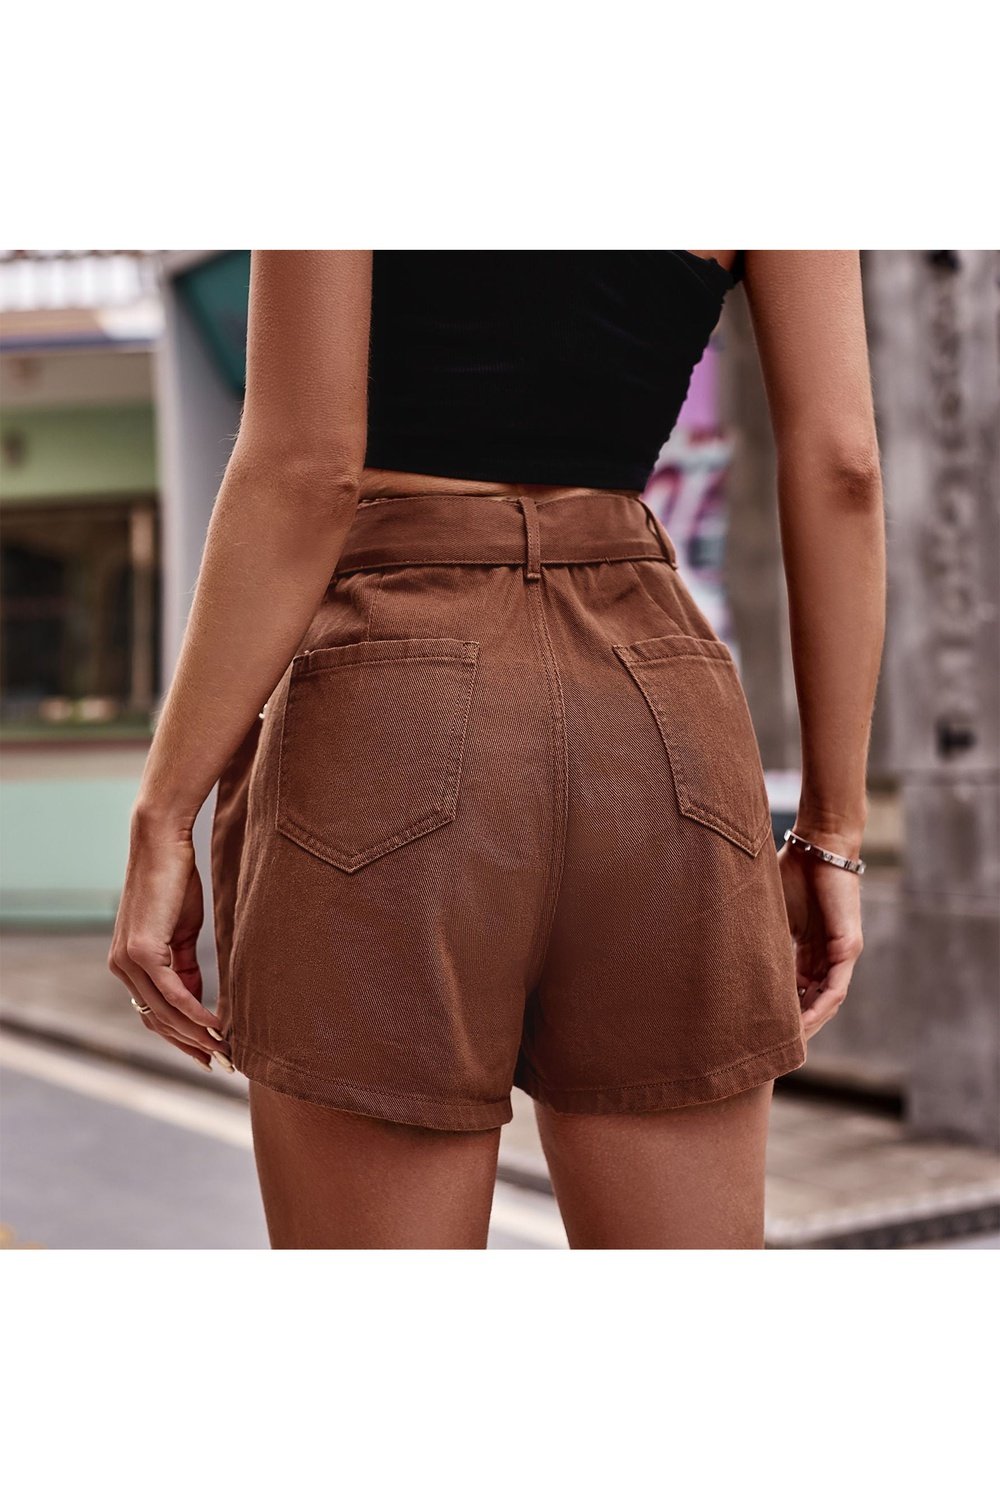 Belted Denim Shorts with Pockets - Denim Shorts - FITGGINS